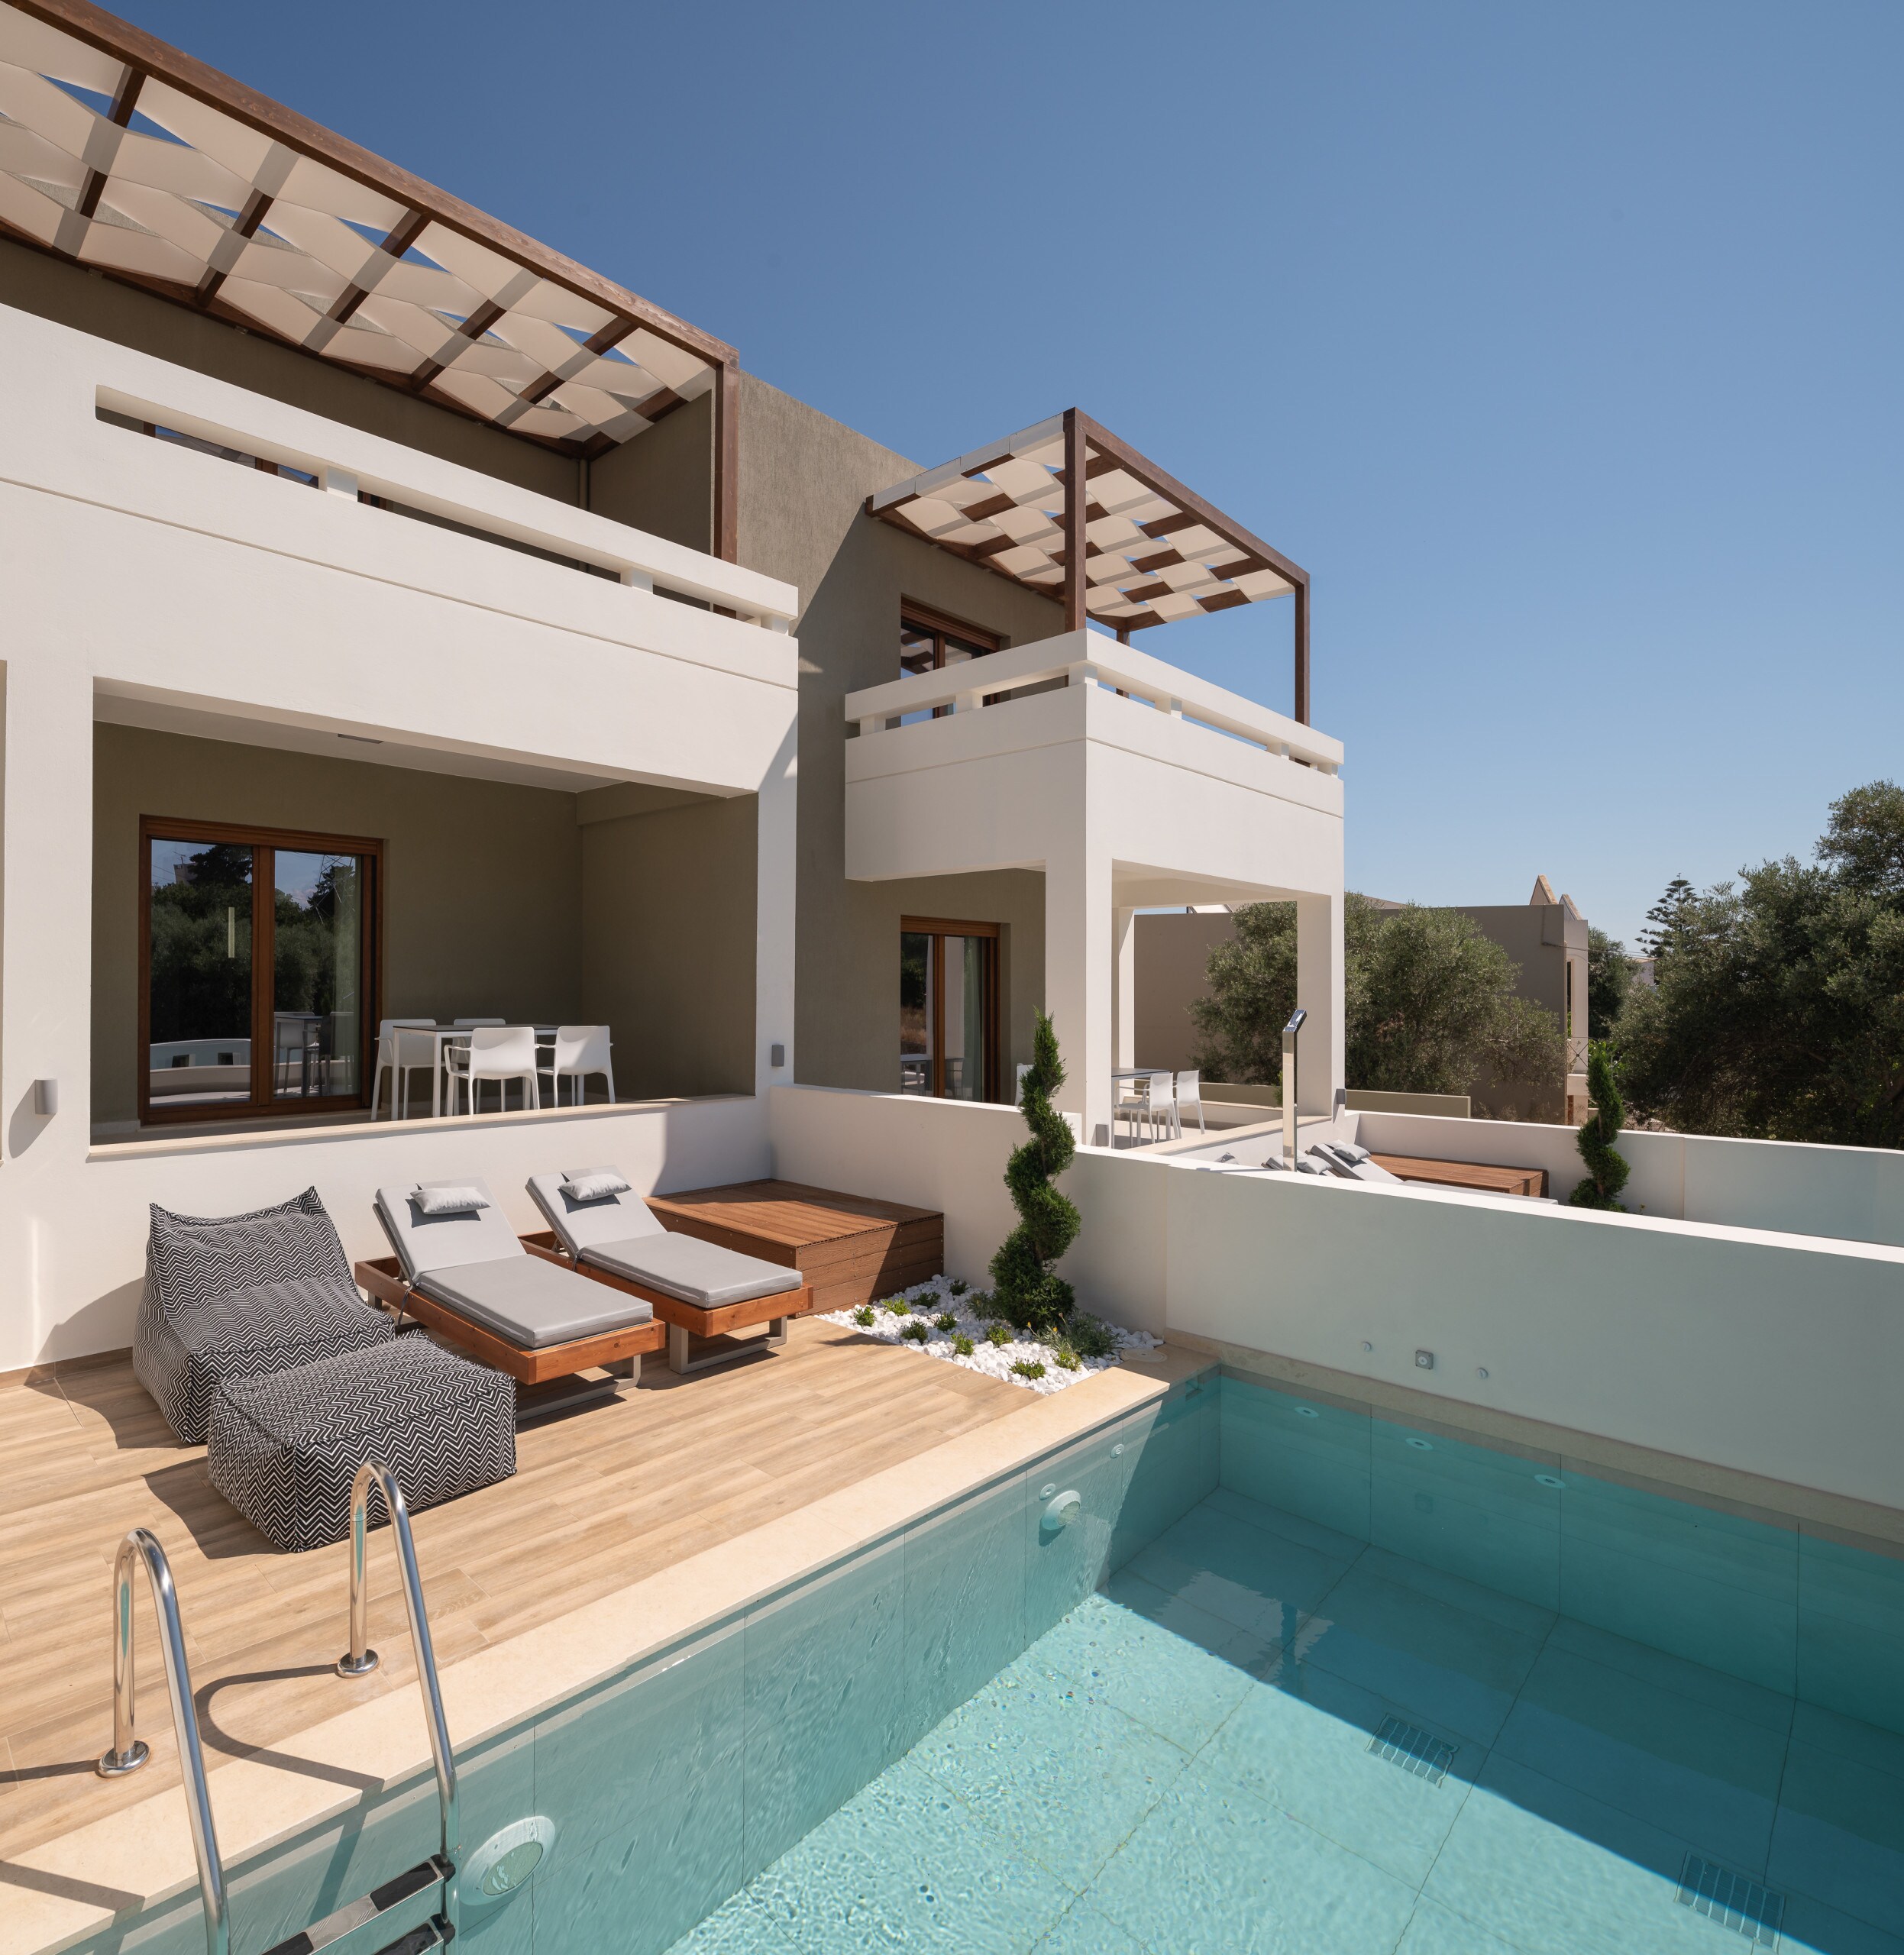 De.Light Boutique Villa II provides an idyllic setting for luxury self-catering home breaks in Crete